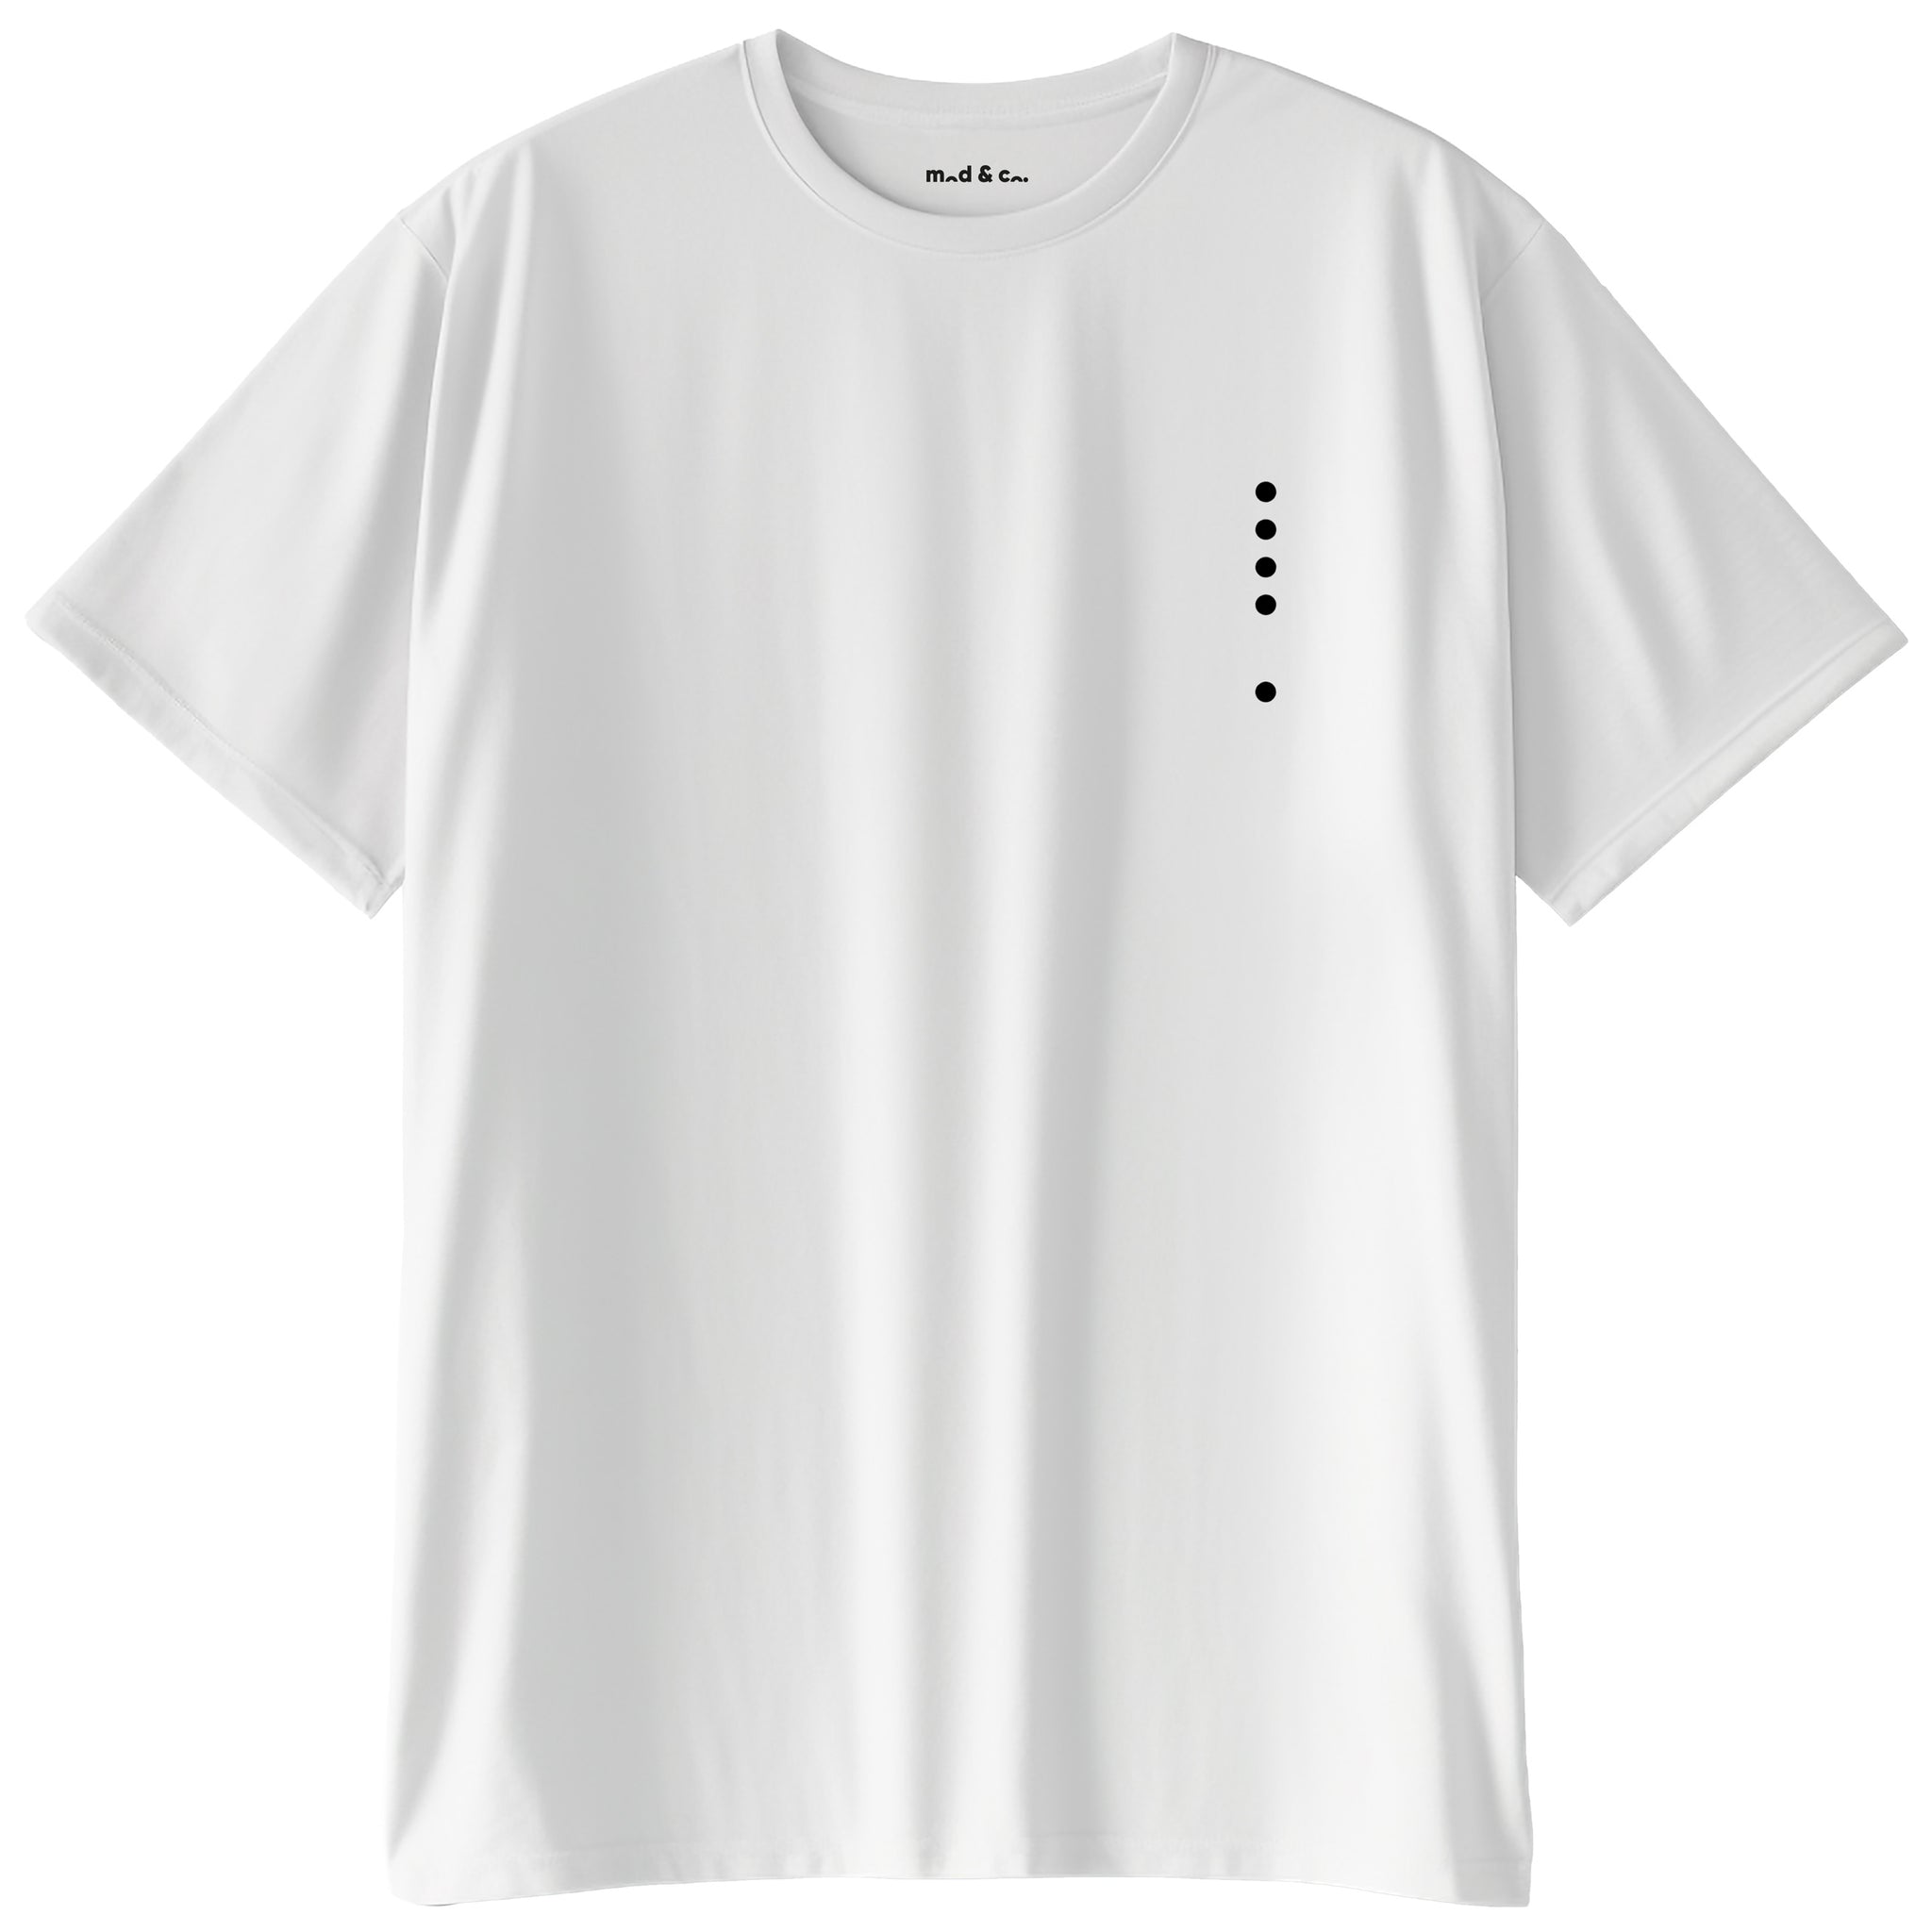 Points Oversize T-Shirt